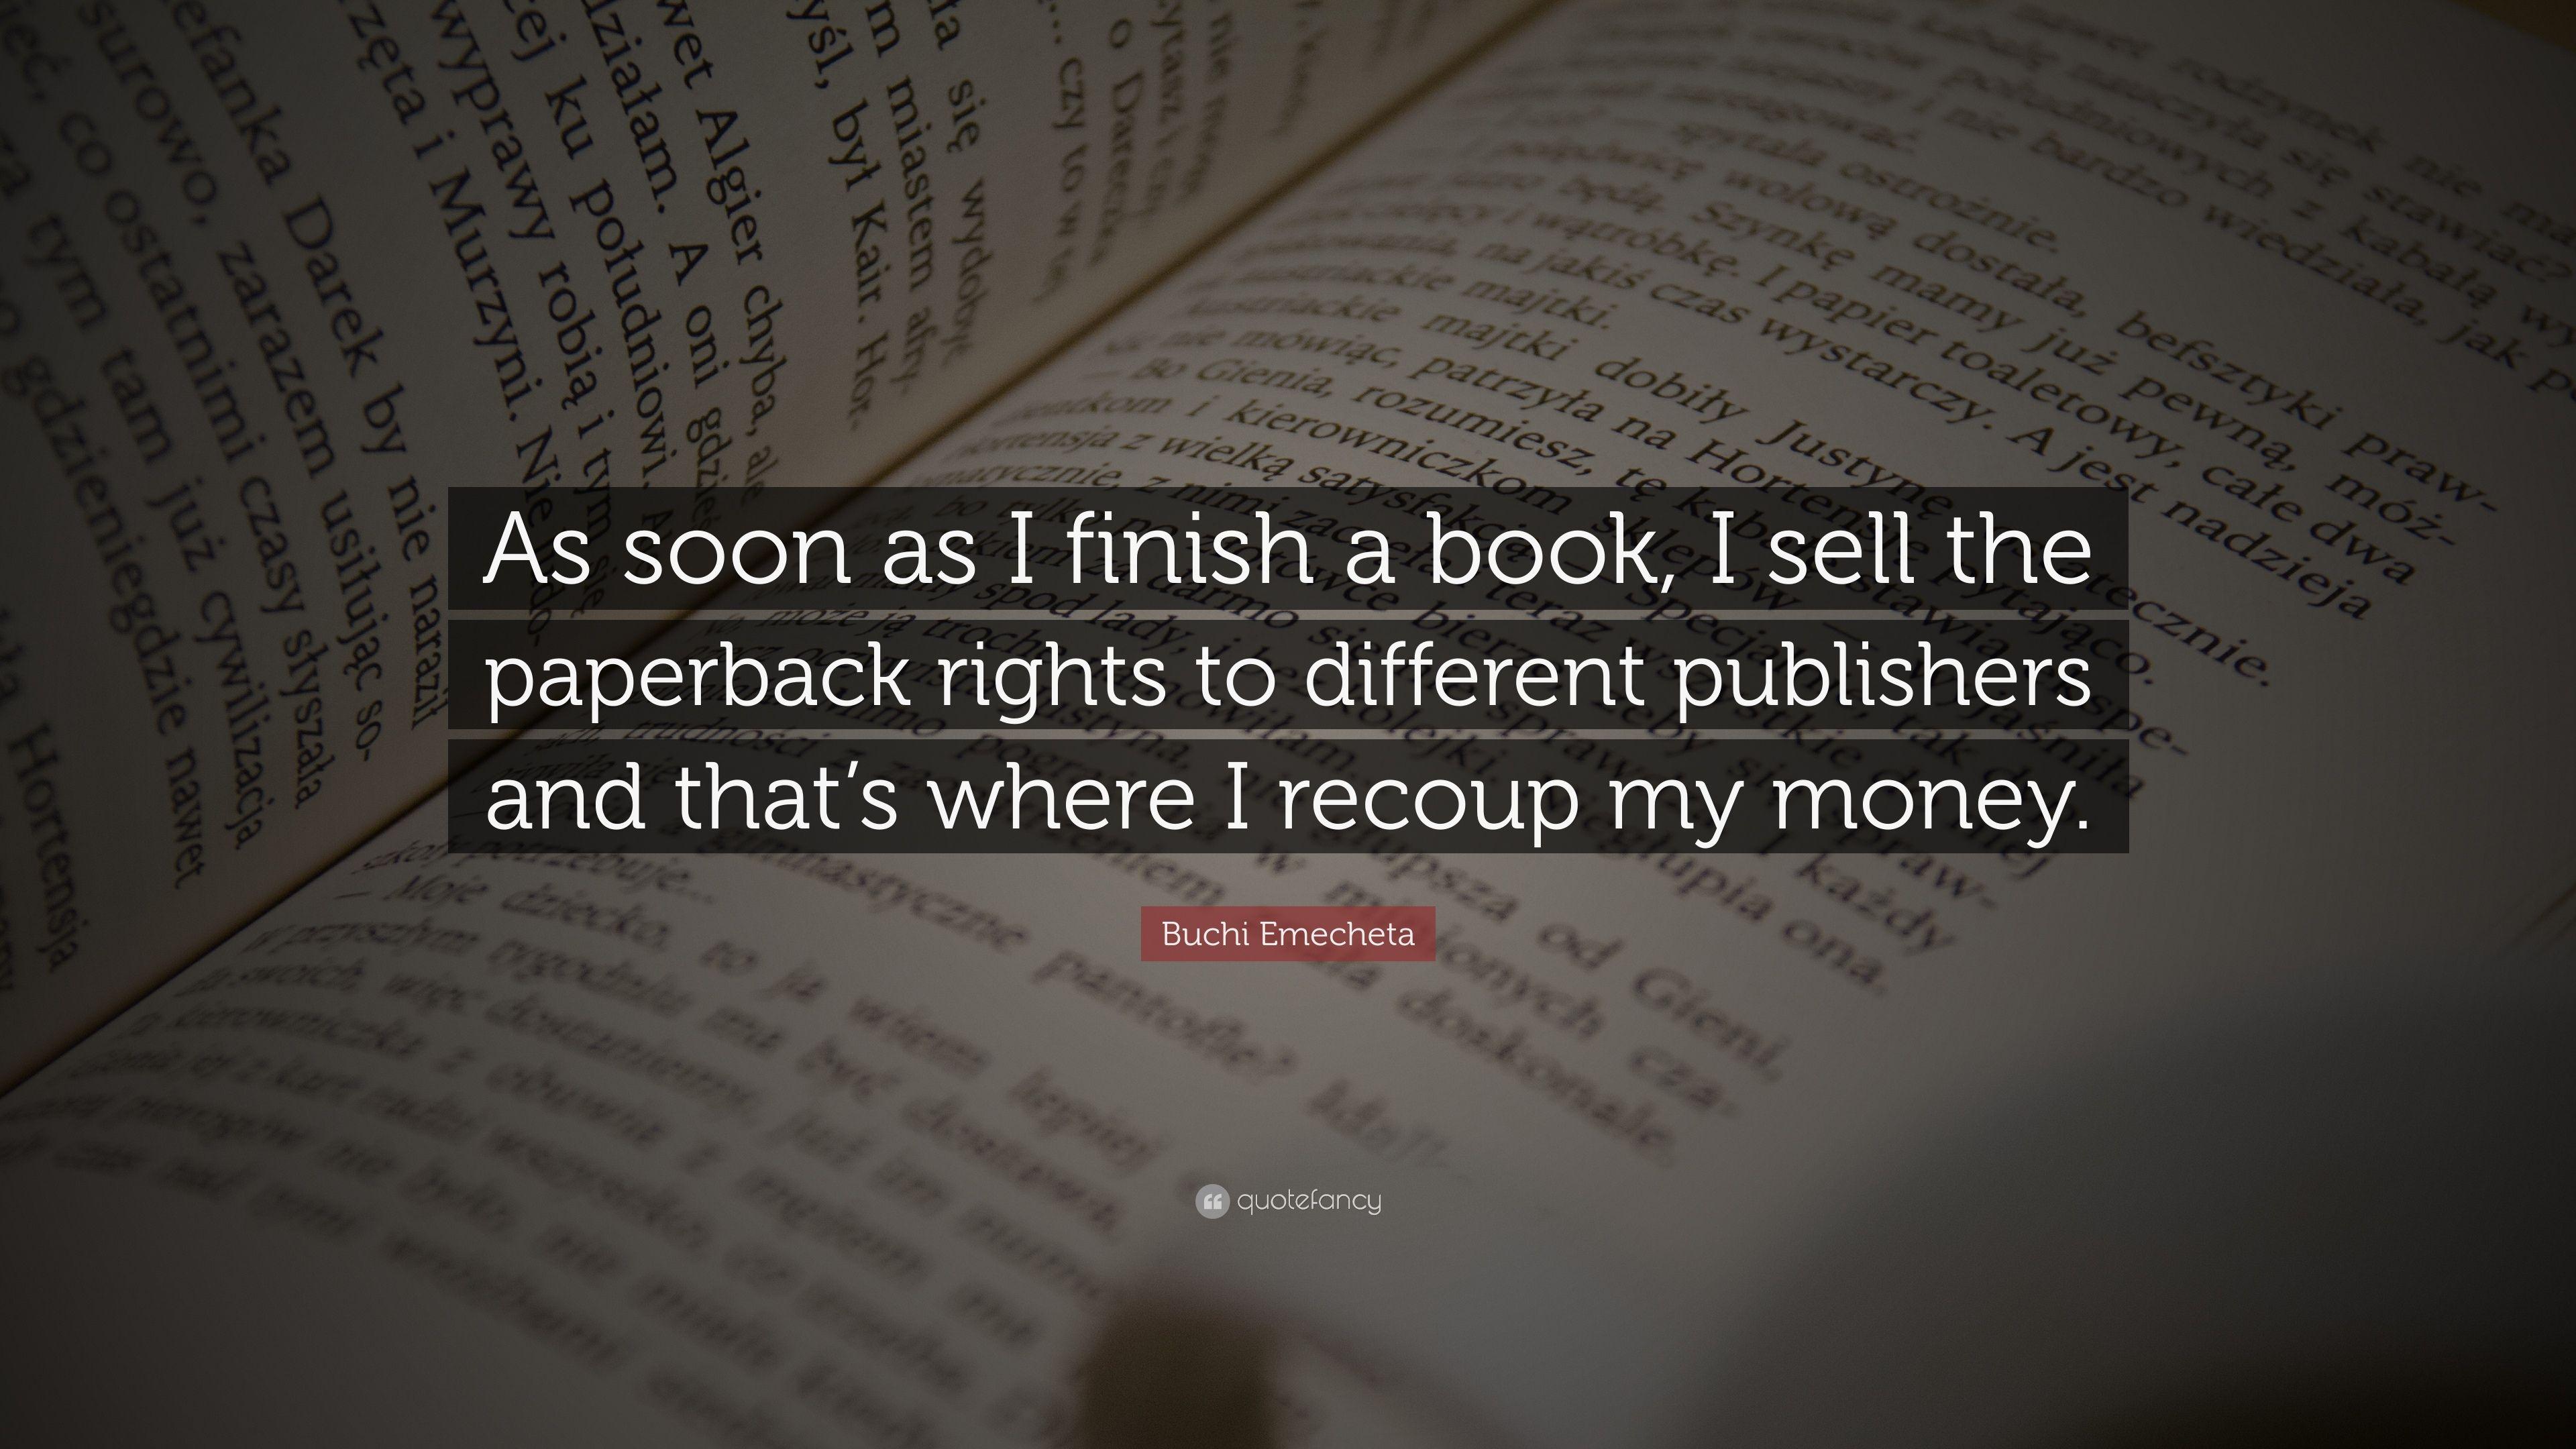 Buchi Emecheta Quote: “As soon as I finish a book, I sell